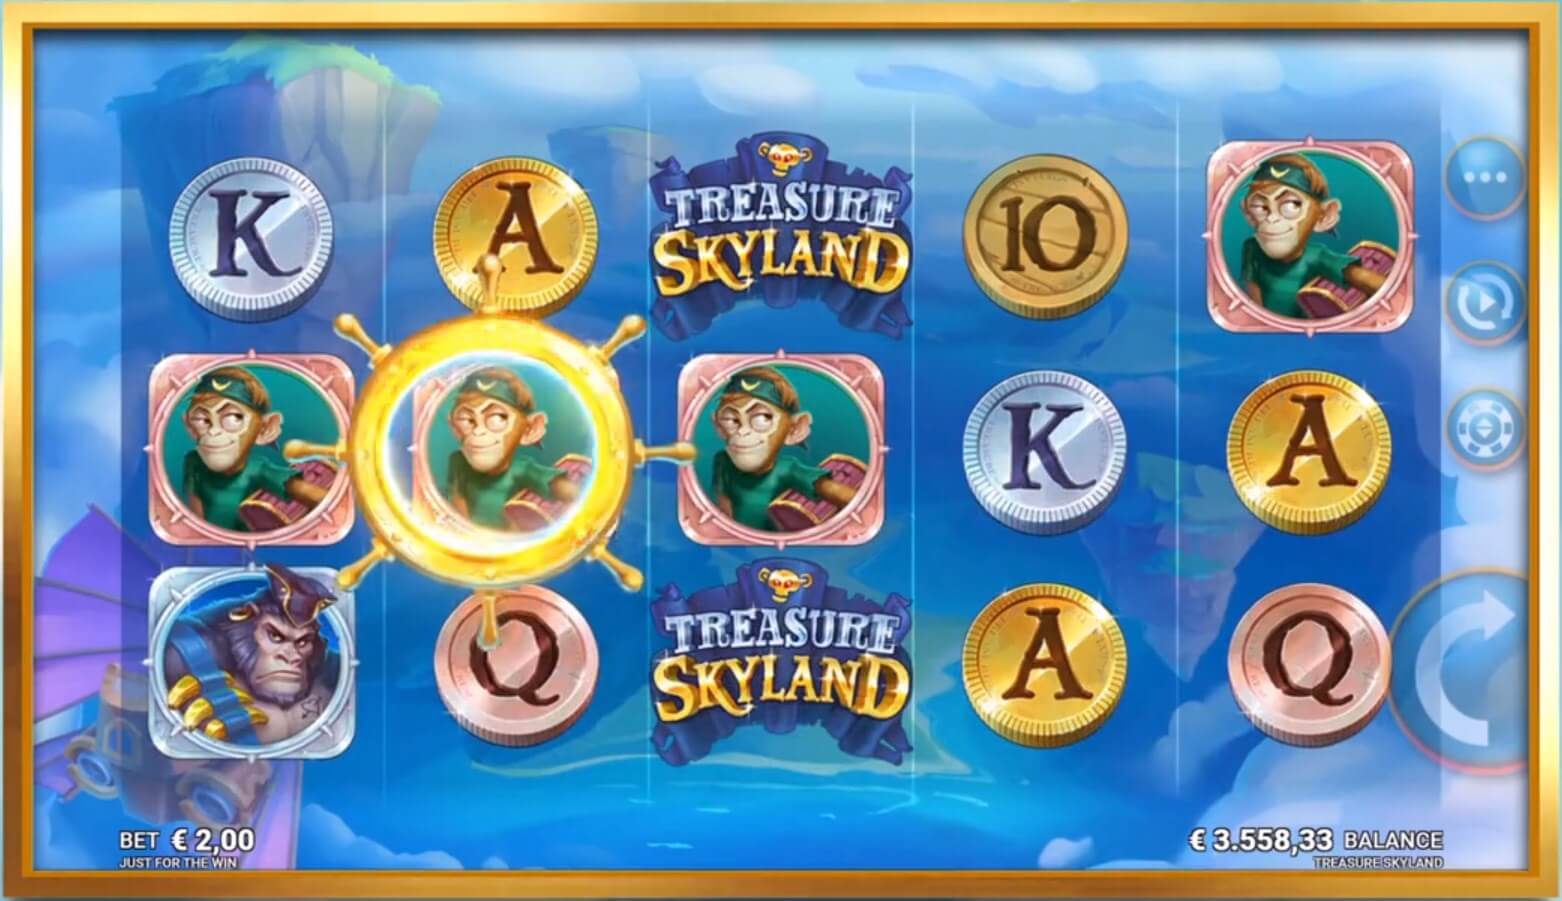 Treasure Skyland Slot by JustForTheWin